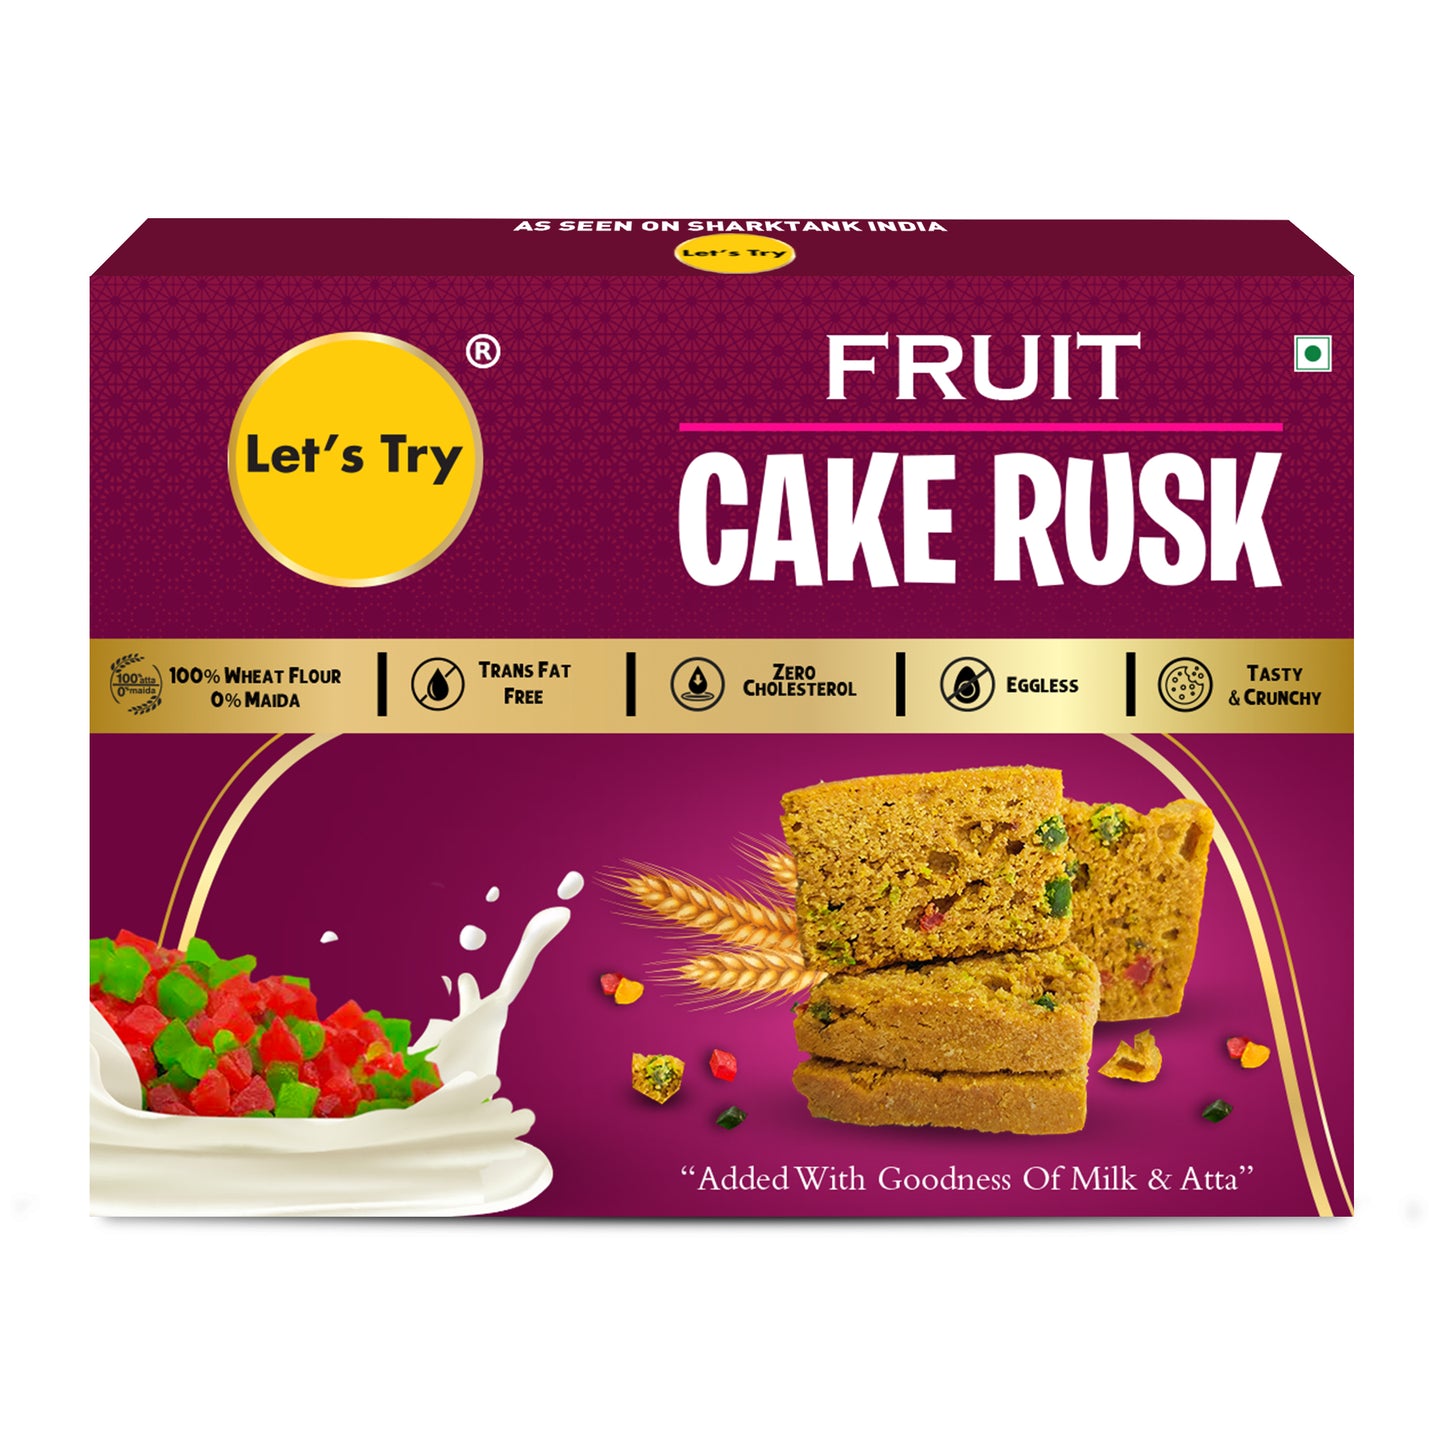 Fruit Cake Rusk